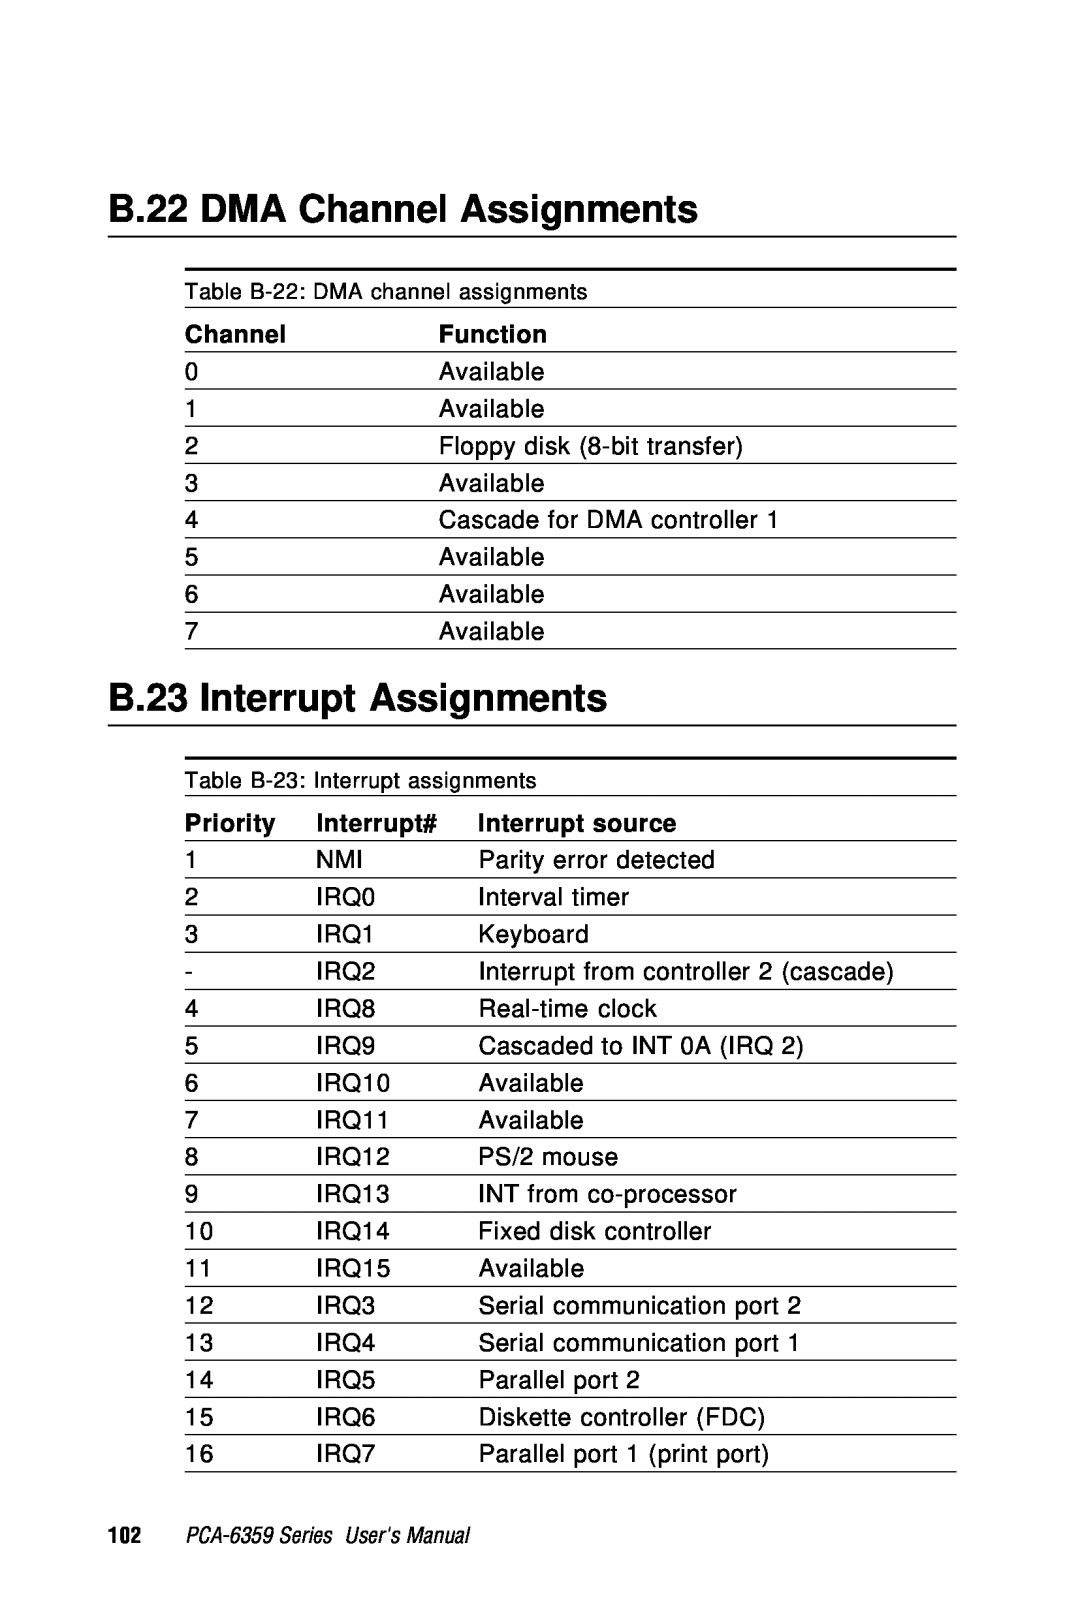 Advantech PCA-6359 user manual B.22 DMA Channel Assignments, B.23 Interrupt Assignments, Table B-22 DMA channel assignments 